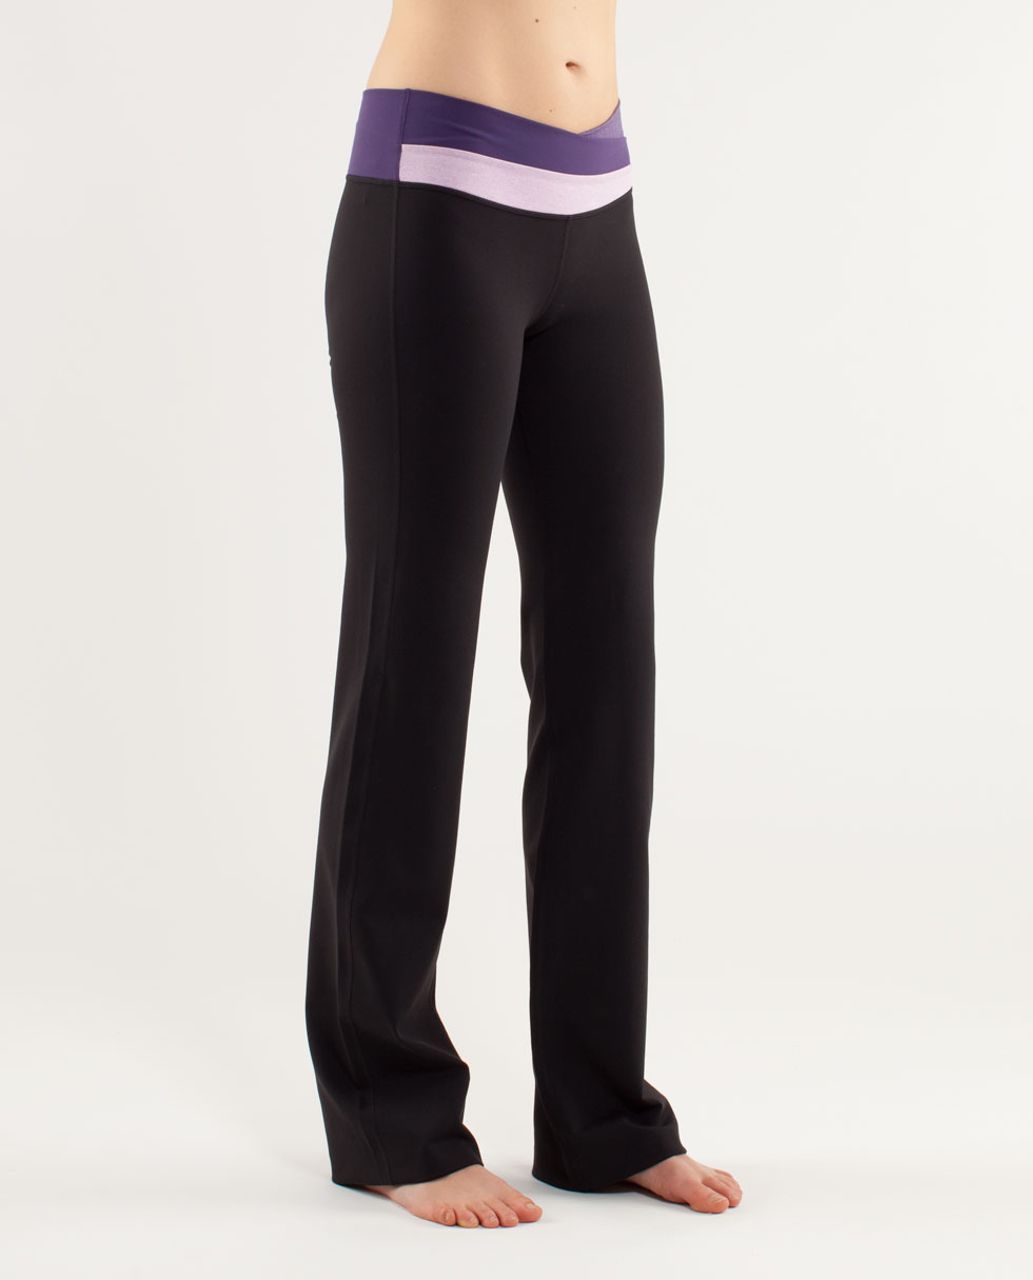 Lululemon Astro Pant *32 Yoga pants flare classic leggings size 6